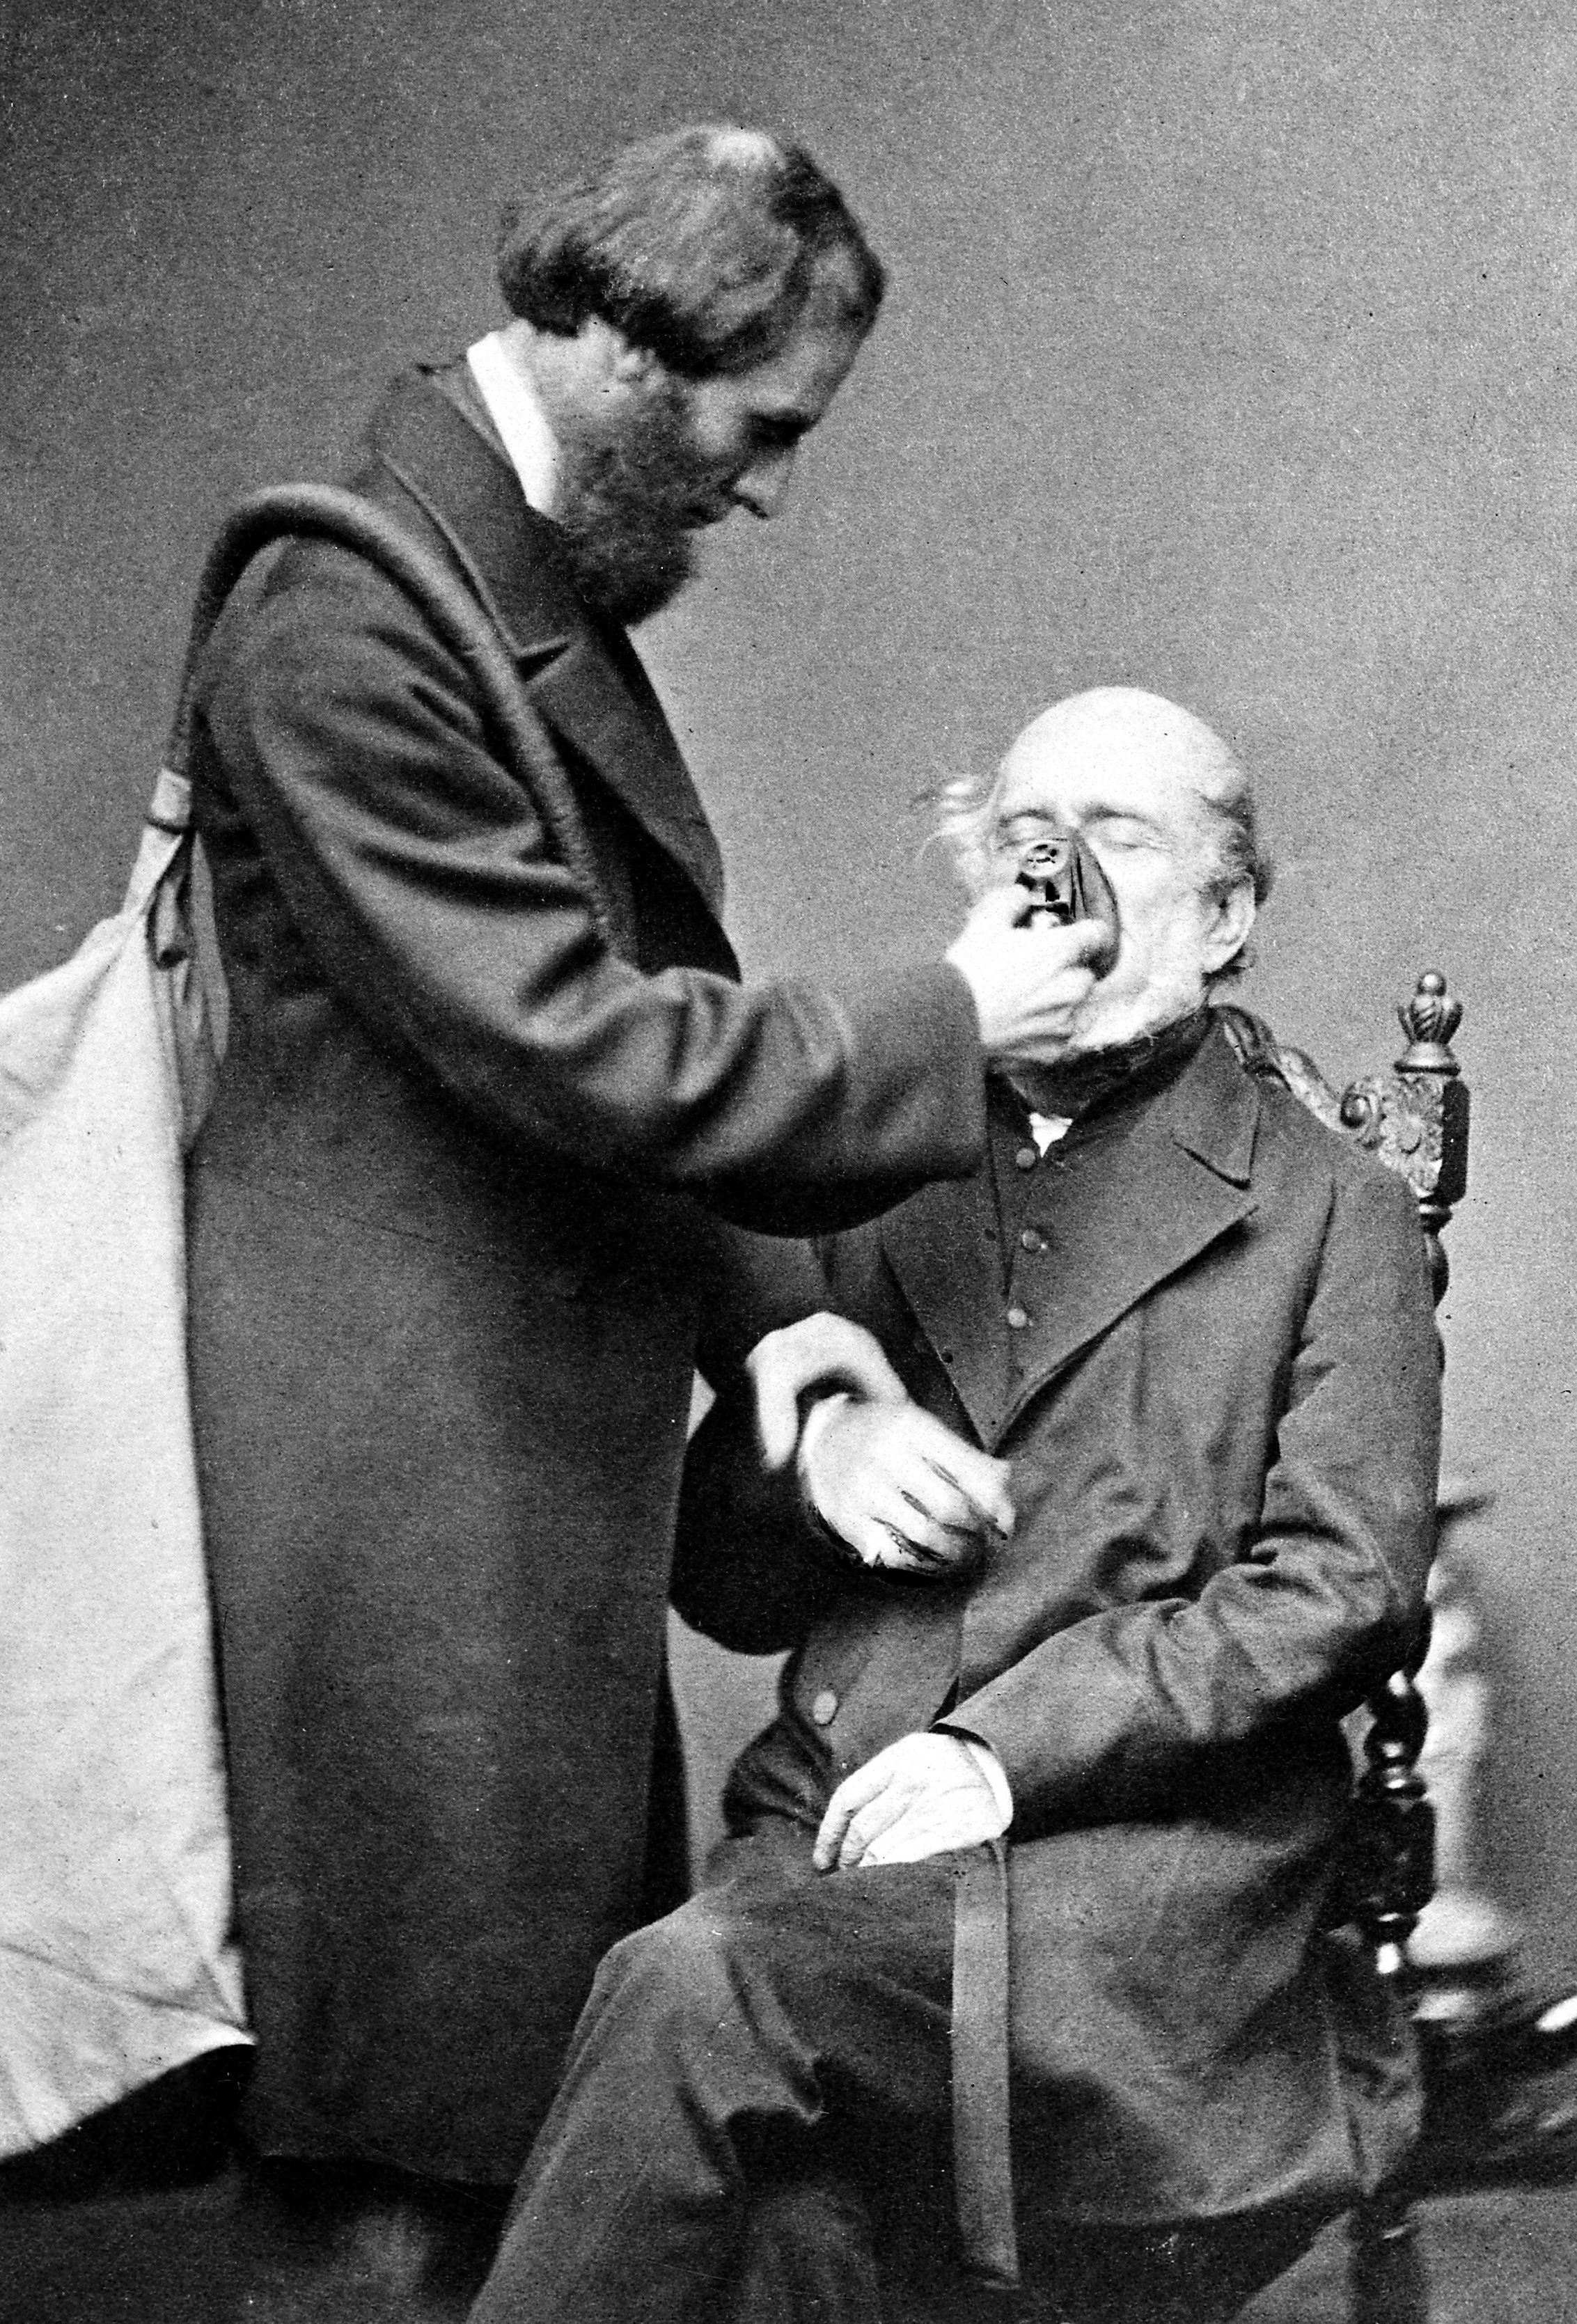 Clover with his chloroform apparatus 1862